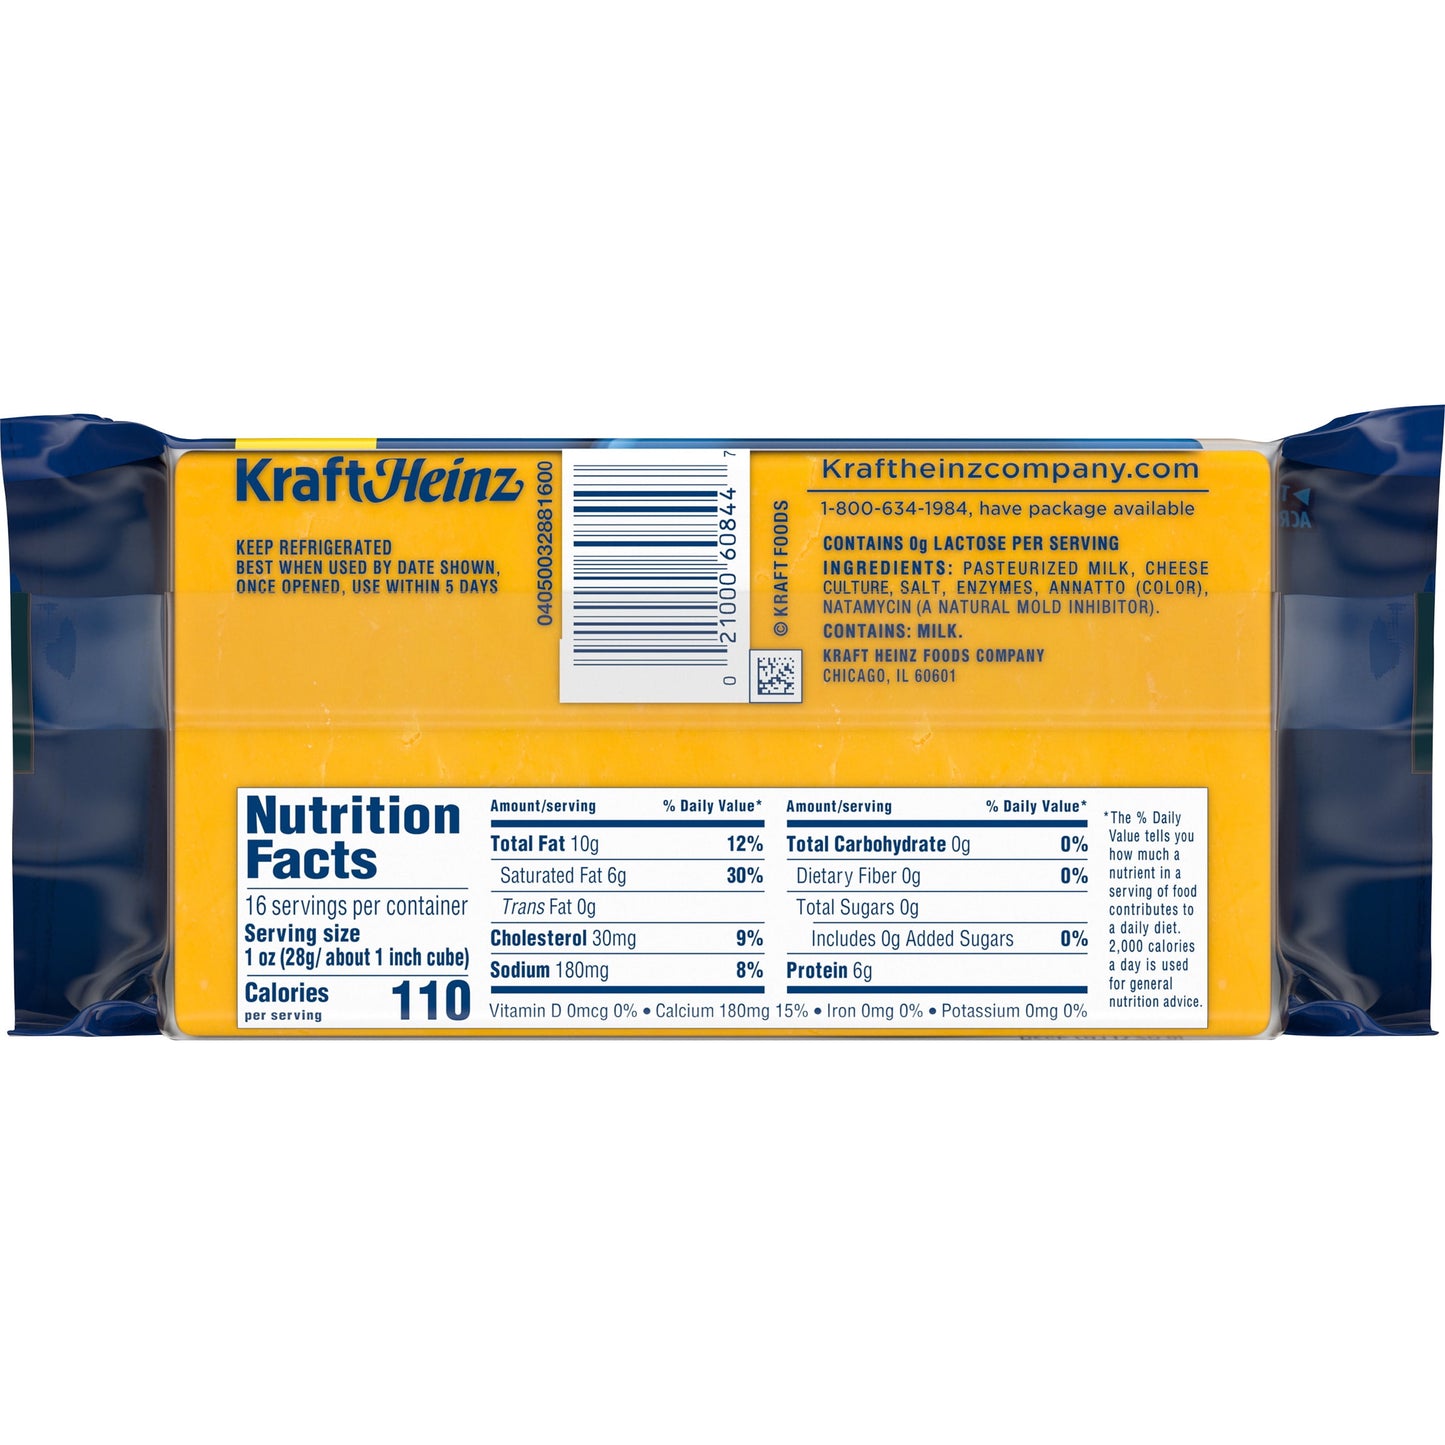 Kraft Medium Cheddar Cheese, 16 oz Block